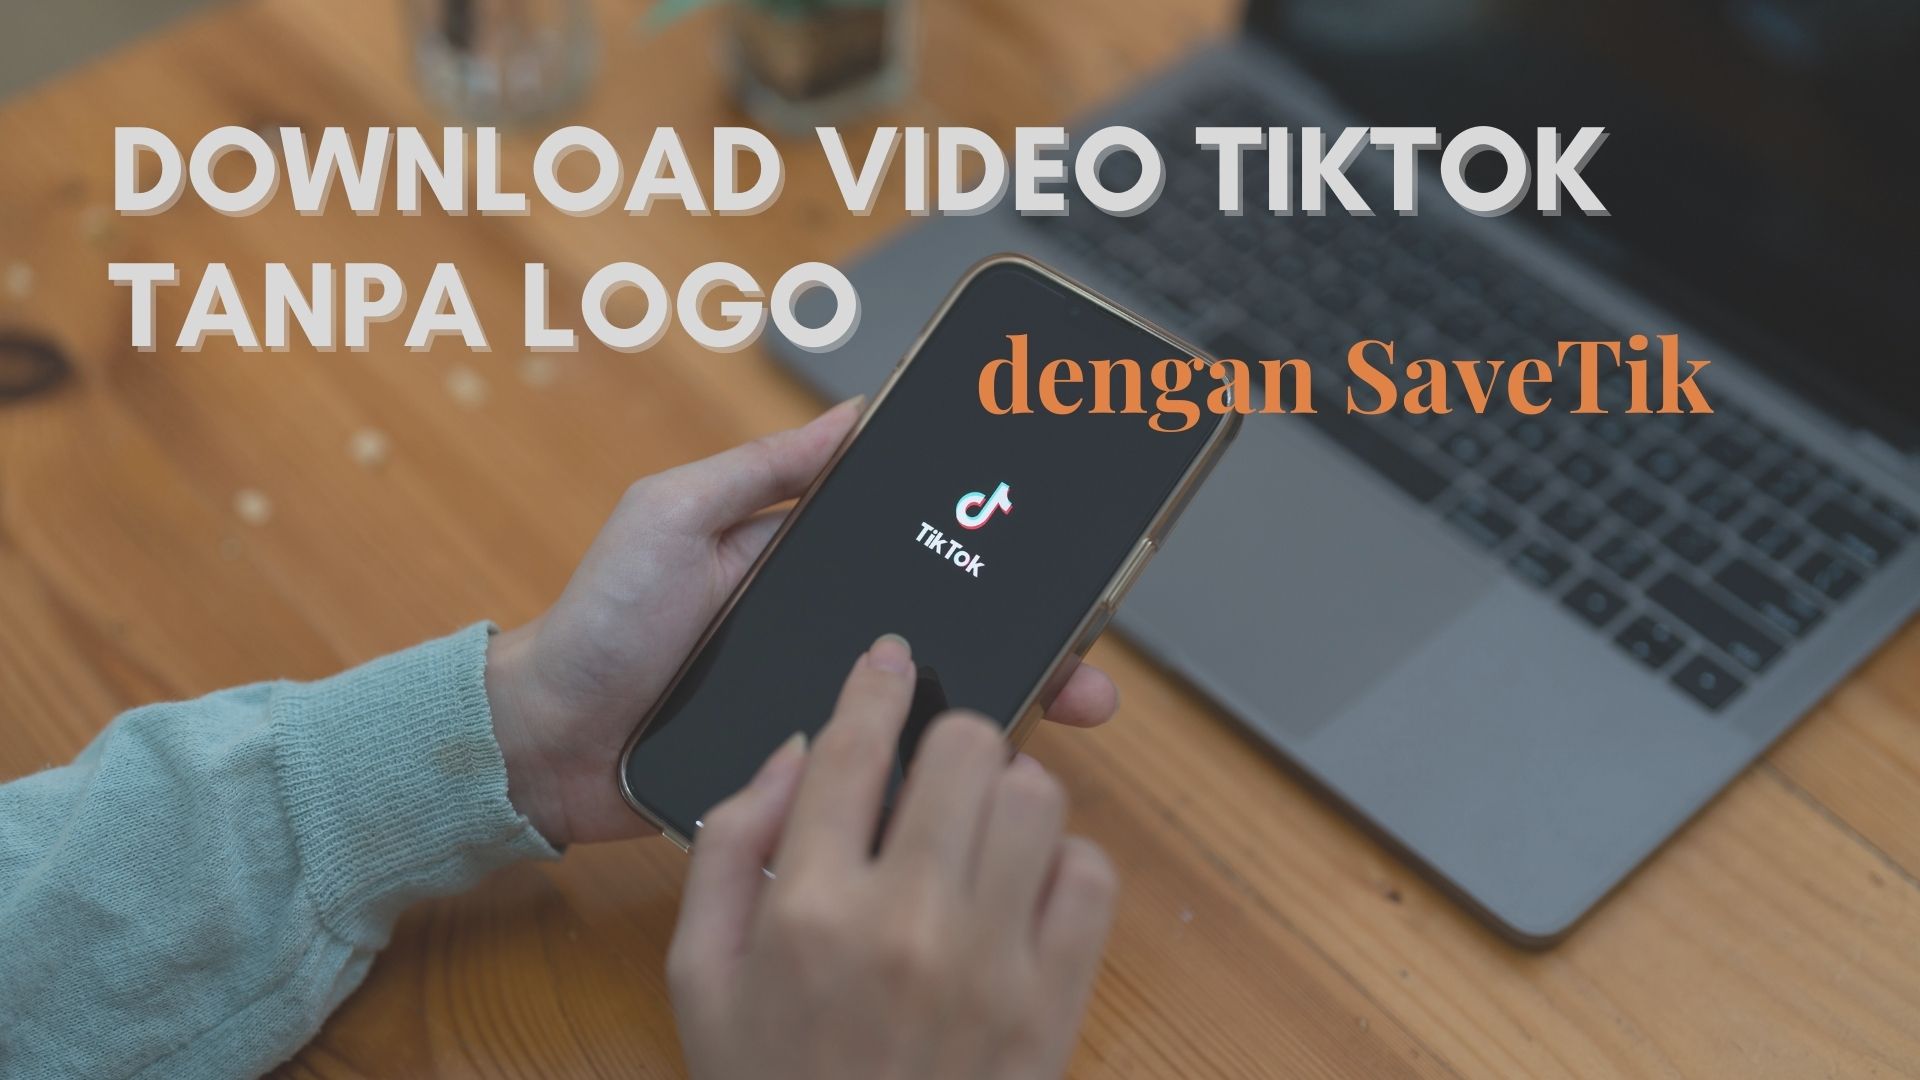 Download Video Tiktok Tanpa Logo Dengan SaveTik